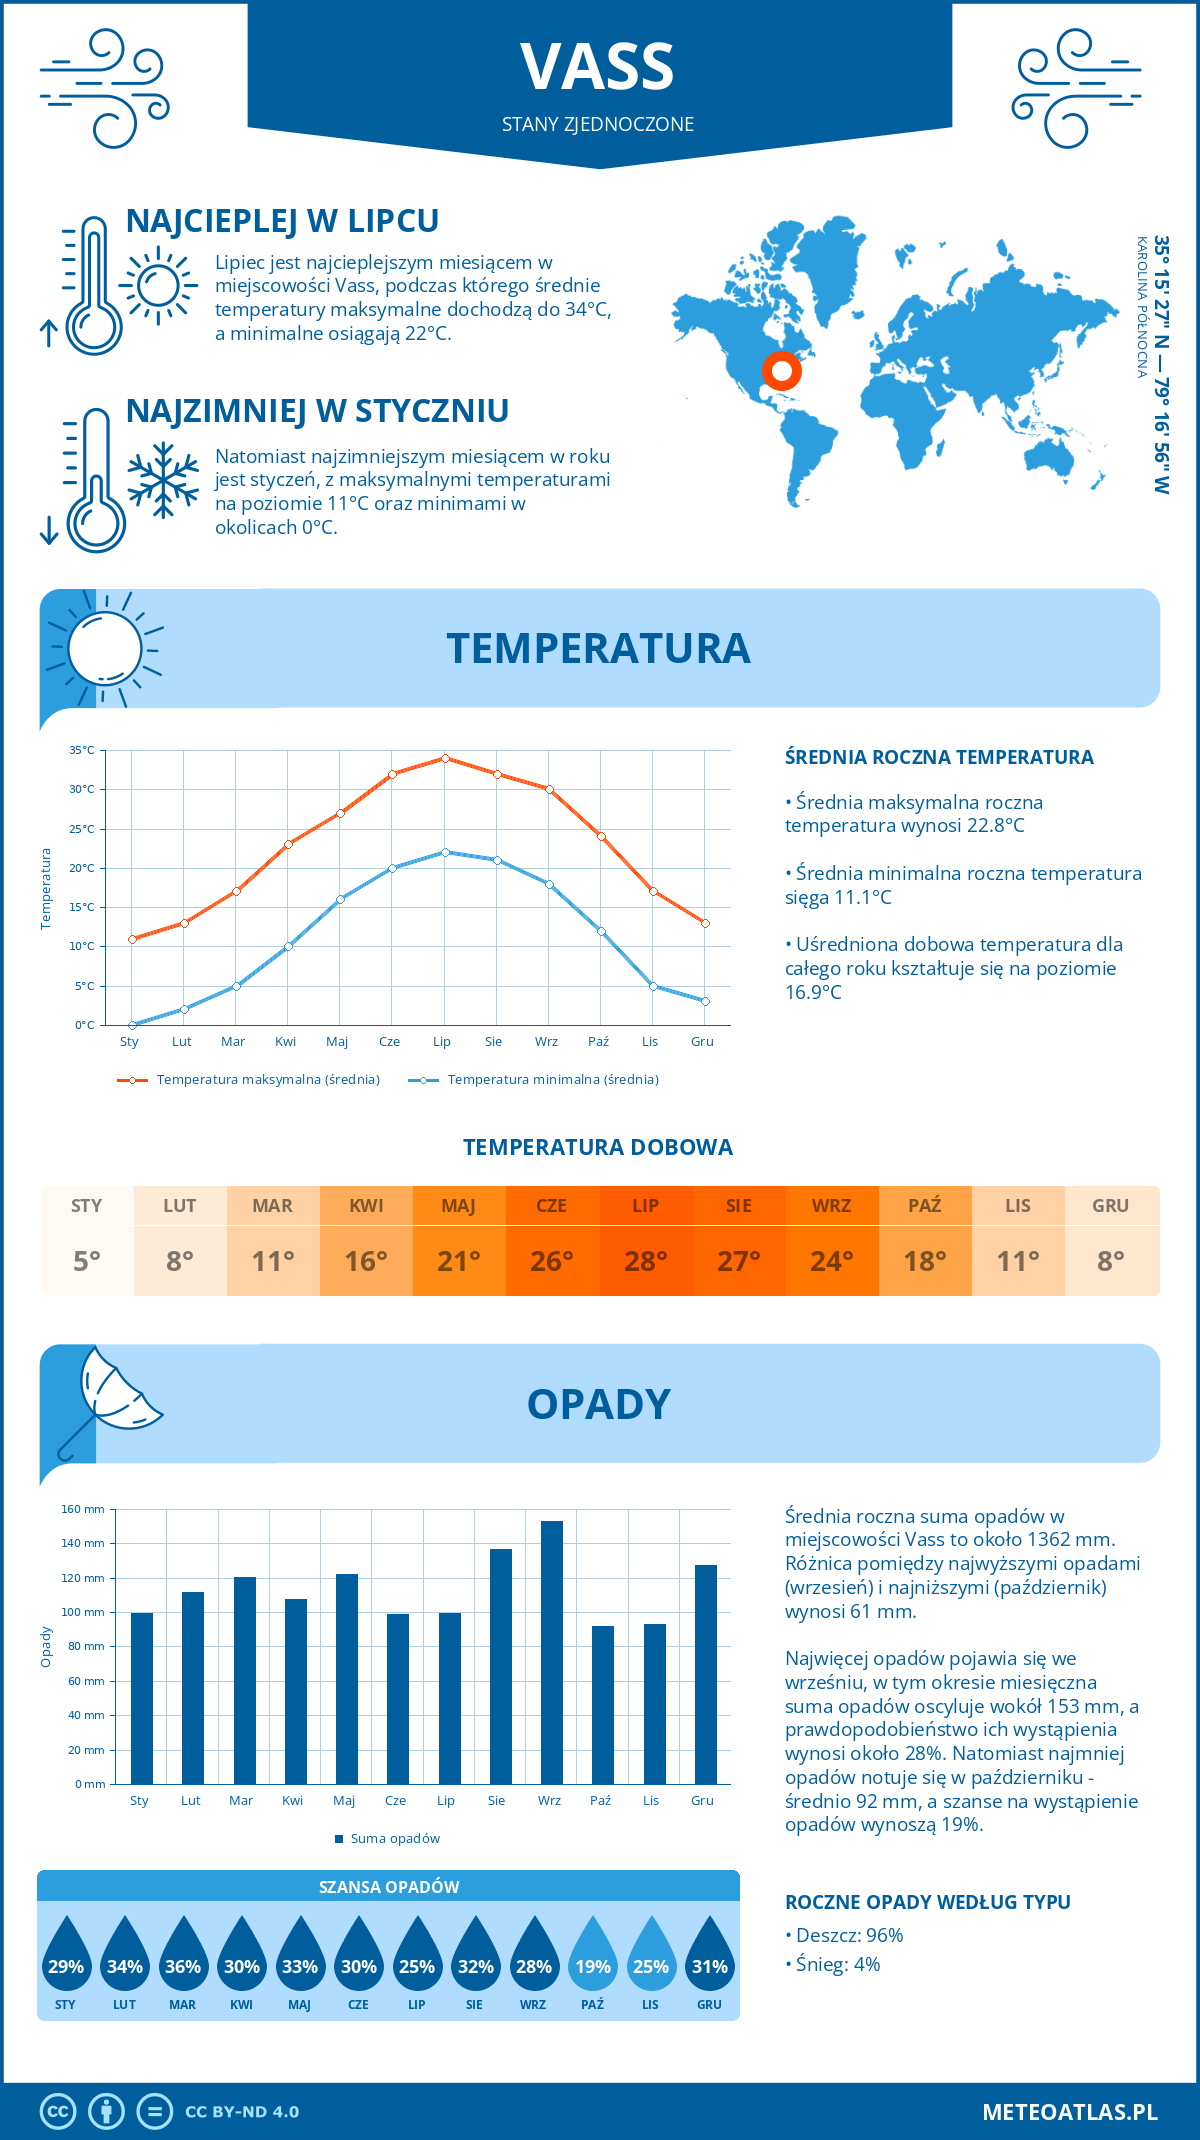 Pogoda Vass (Stany Zjednoczone). Temperatura oraz opady.